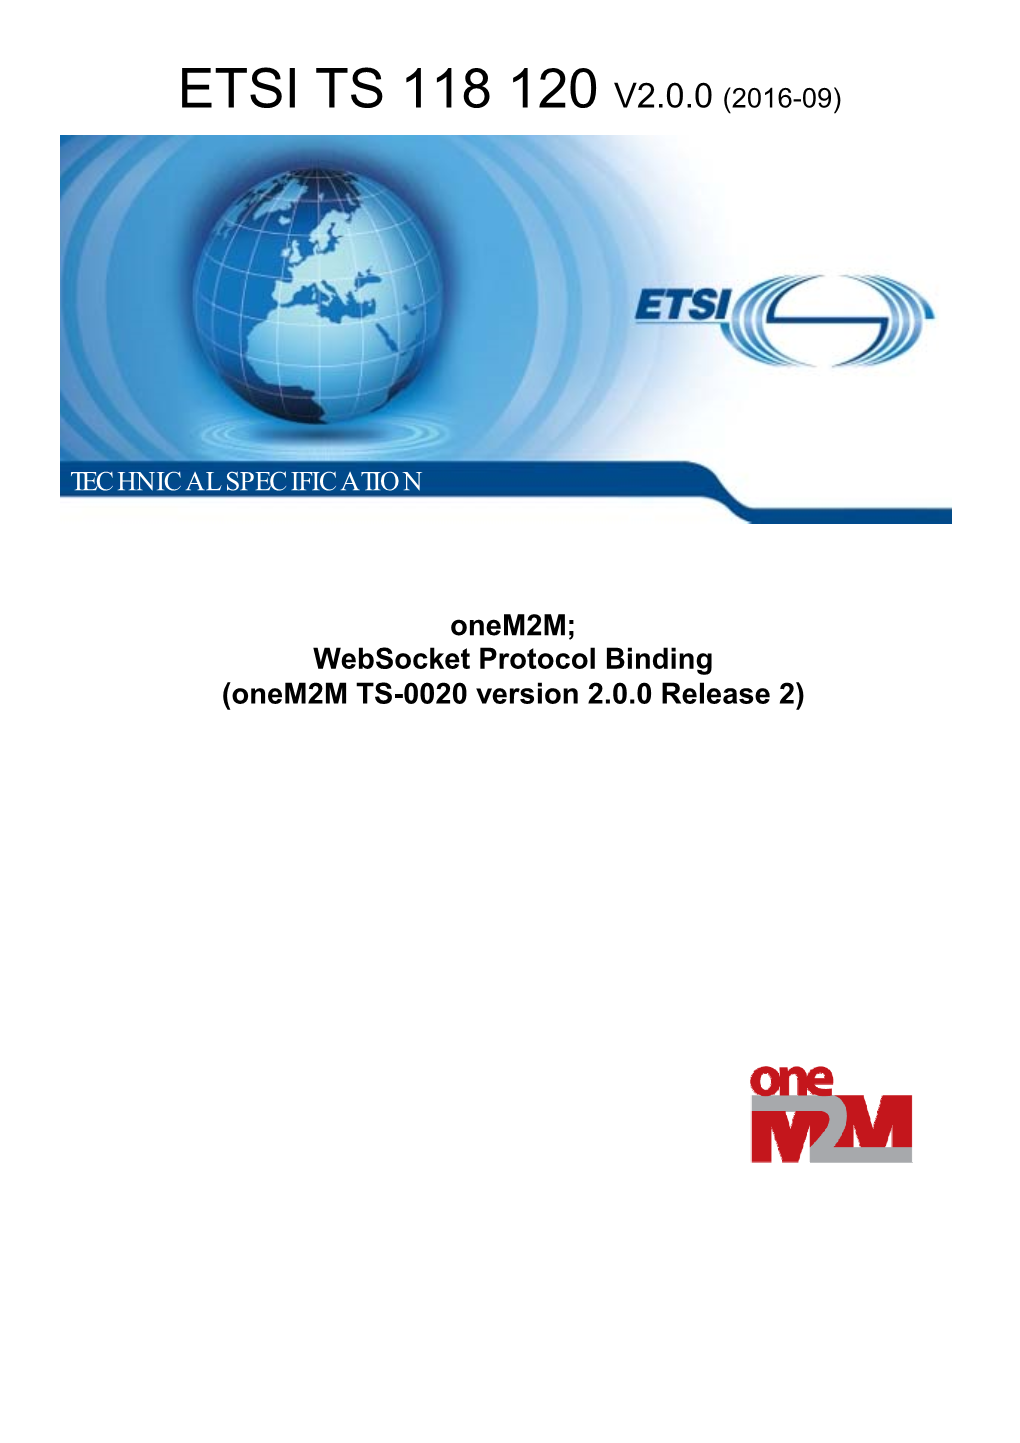 Websocket Protocol Binding (Onem2m TS-0020 Version 2.0.0 Release 2)